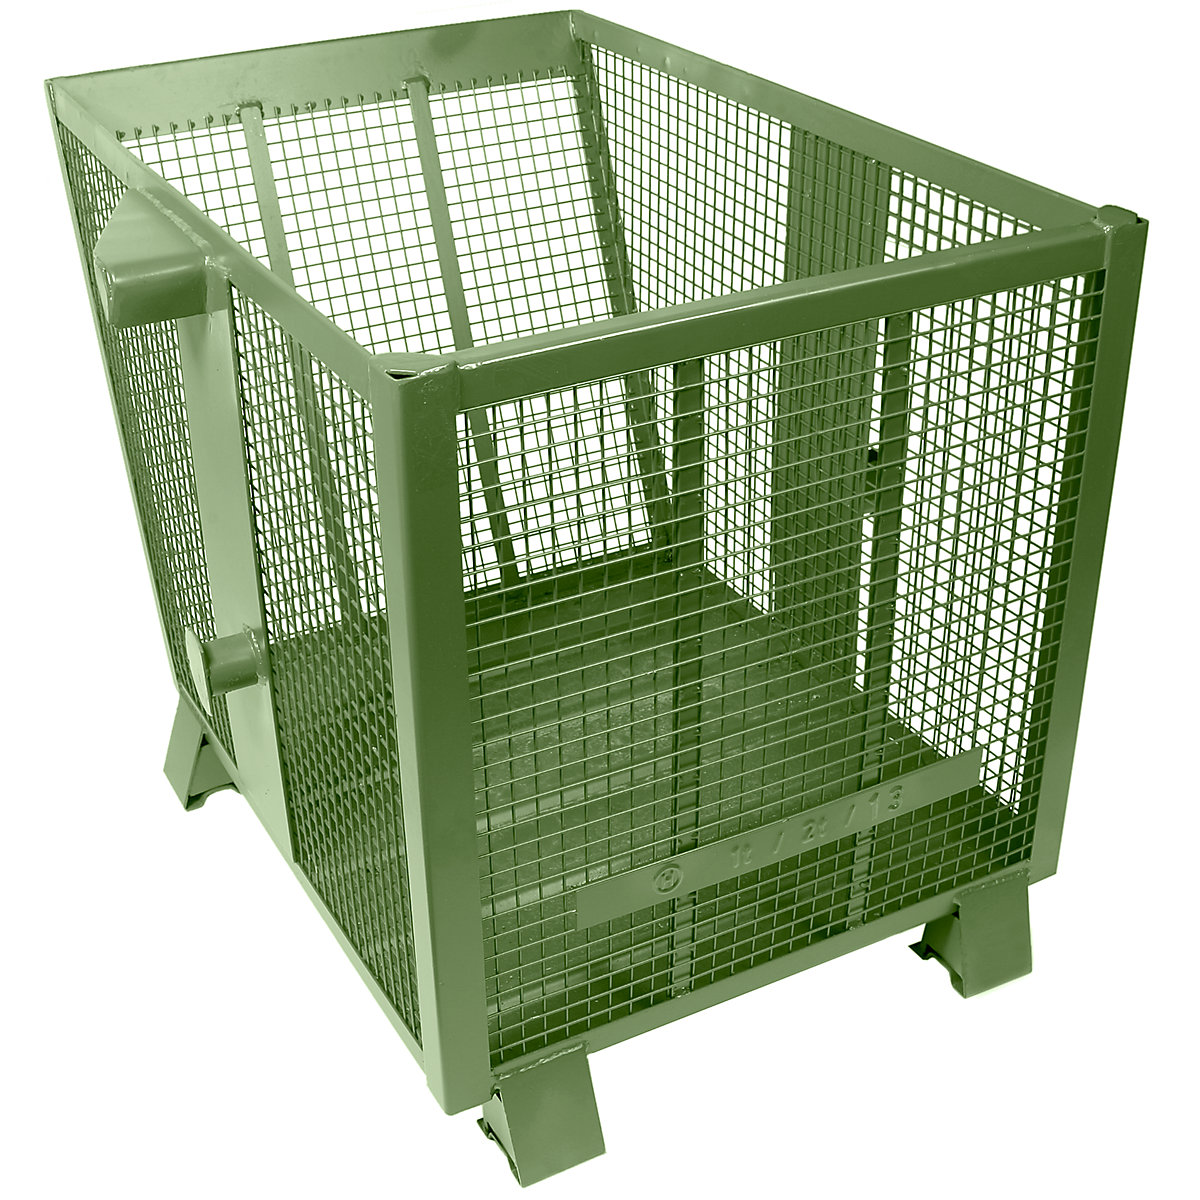 Mriežkový vyklápací kontajner – Heson, objem 0,75 m³, zelená RAL 6011-4